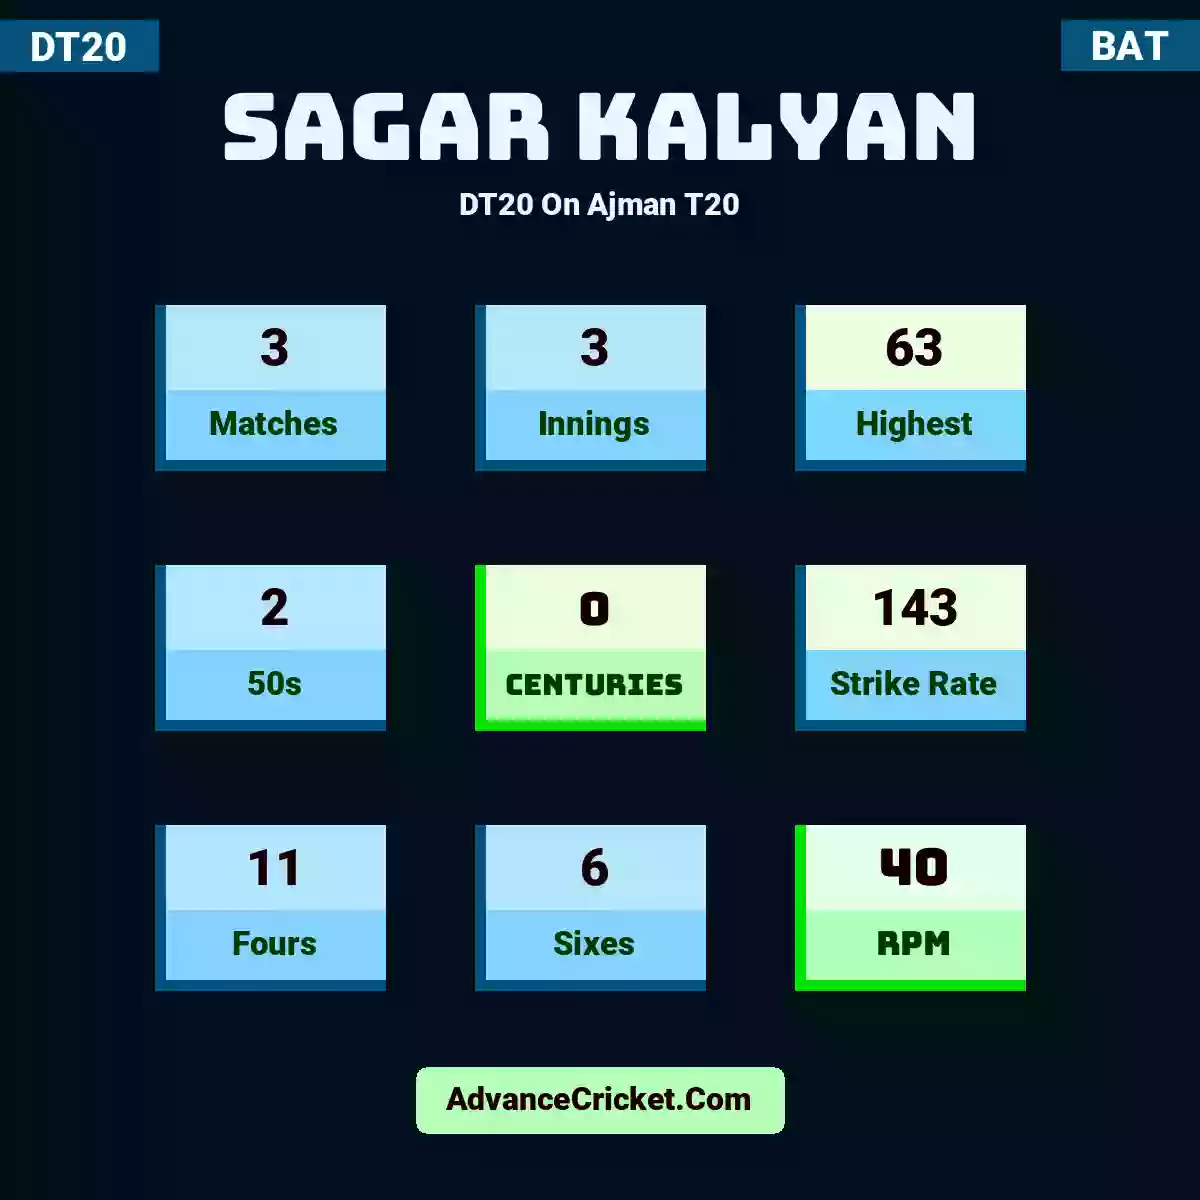 Sagar Kalyan DT20  On Ajman T20, Sagar Kalyan played 3 matches, scored 63 runs as highest, 2 half-centuries, and 0 centuries, with a strike rate of 143. S.Kalyan hit 11 fours and 6 sixes, with an RPM of 40.